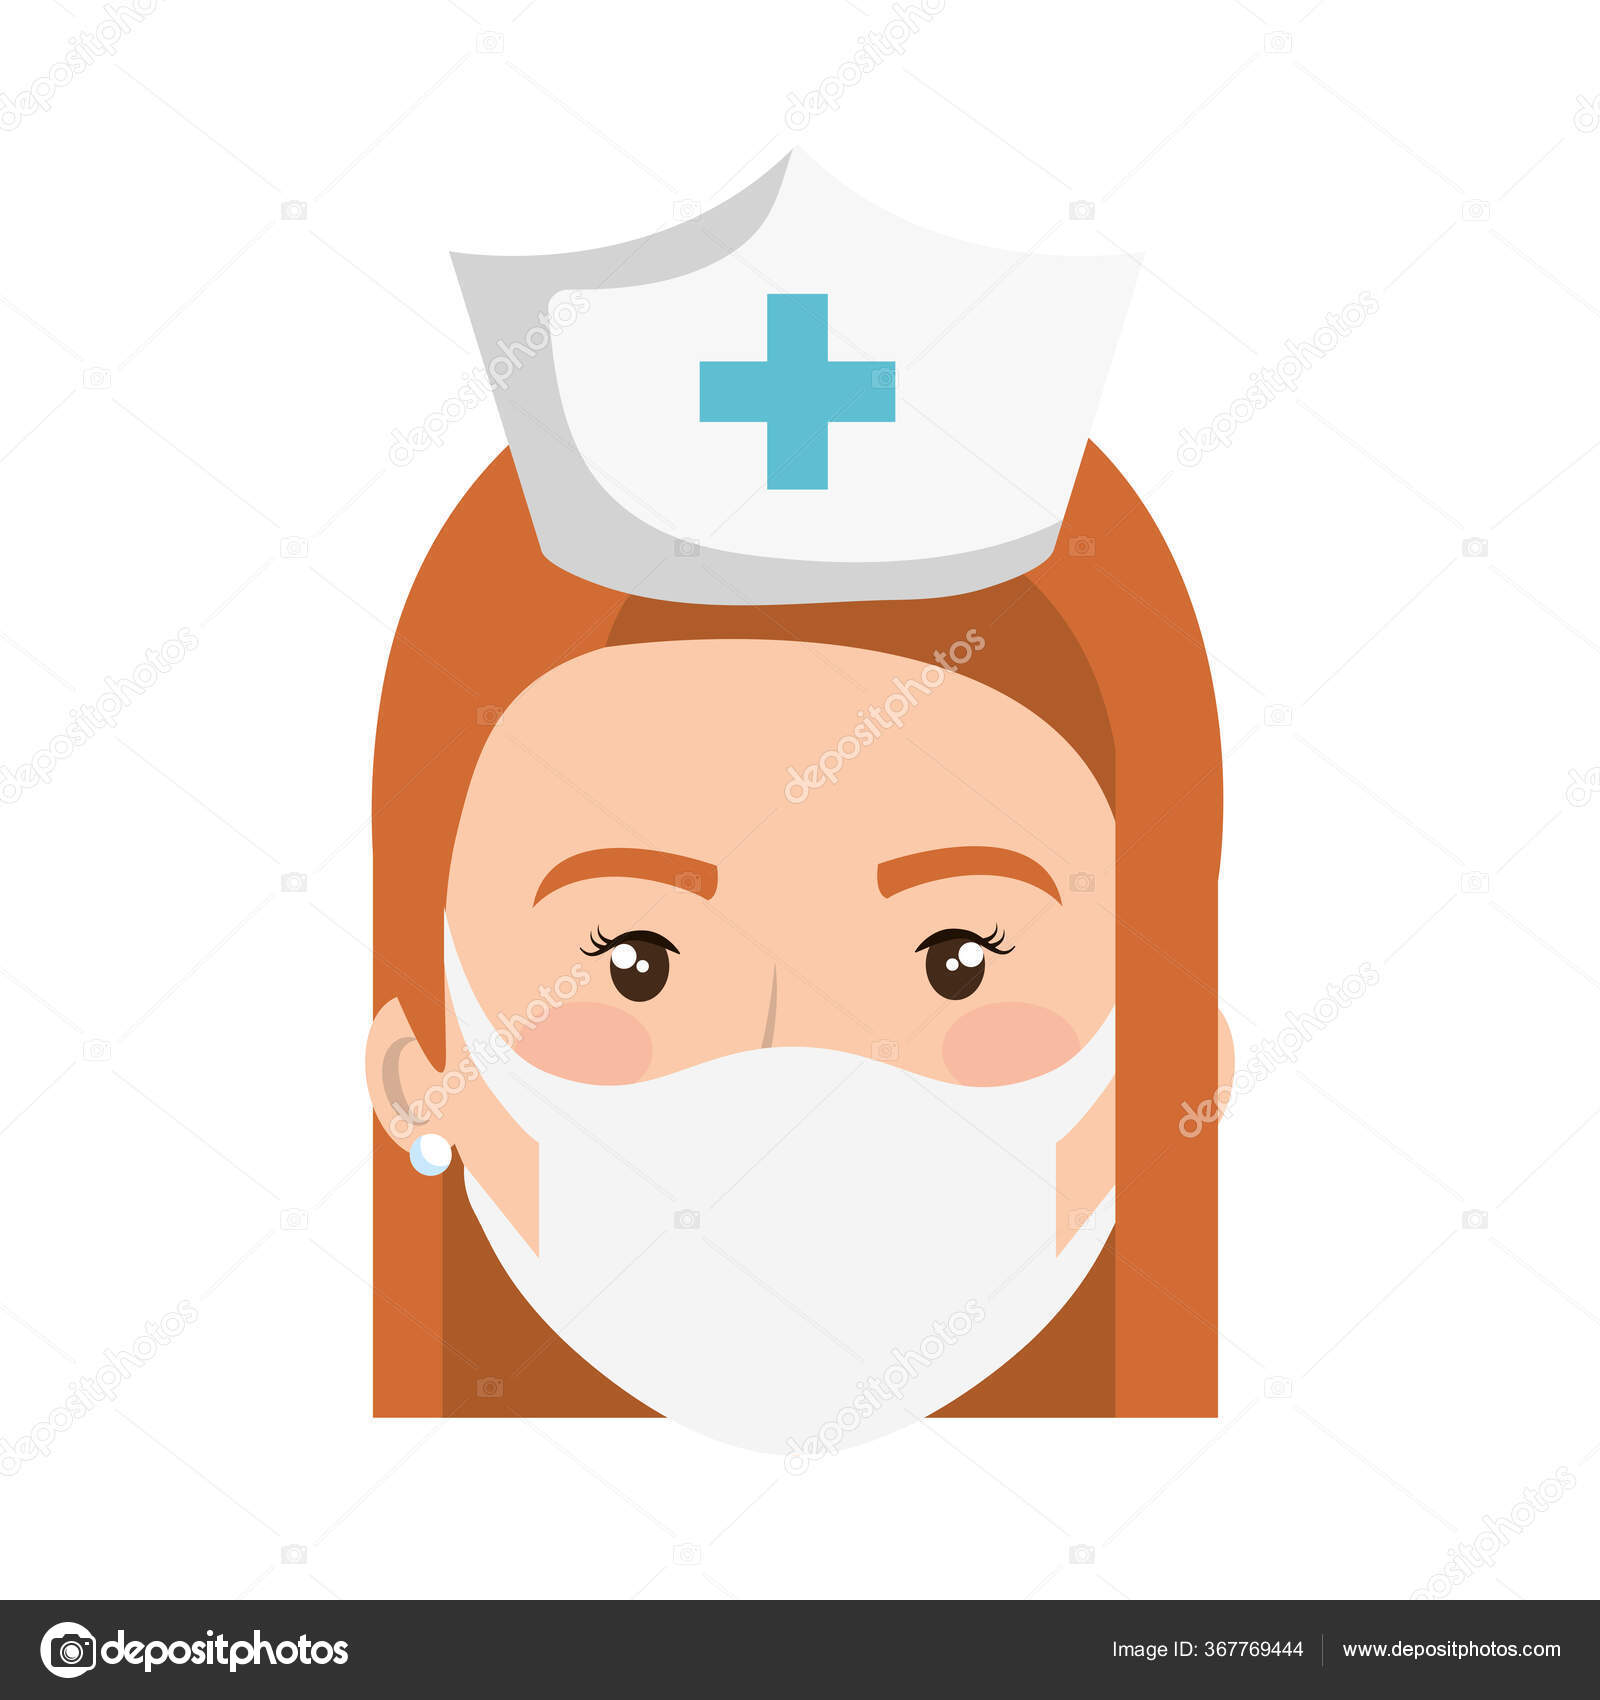 enfermeira feminina de uniforme usando máscara de personagem de